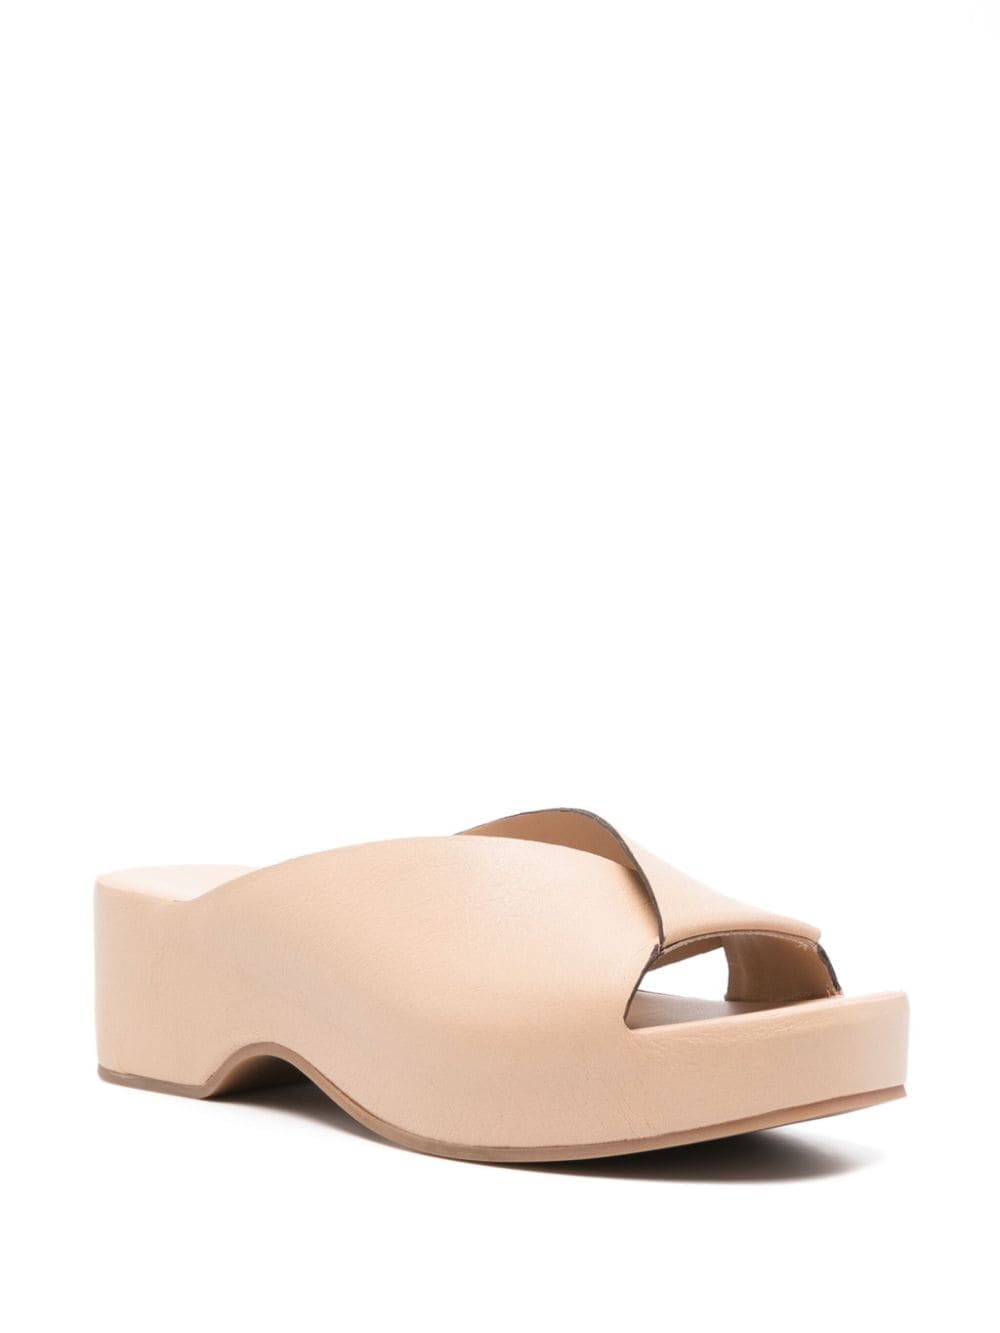 Del Carlo Horus 11729 55mm leather sandals - Beige